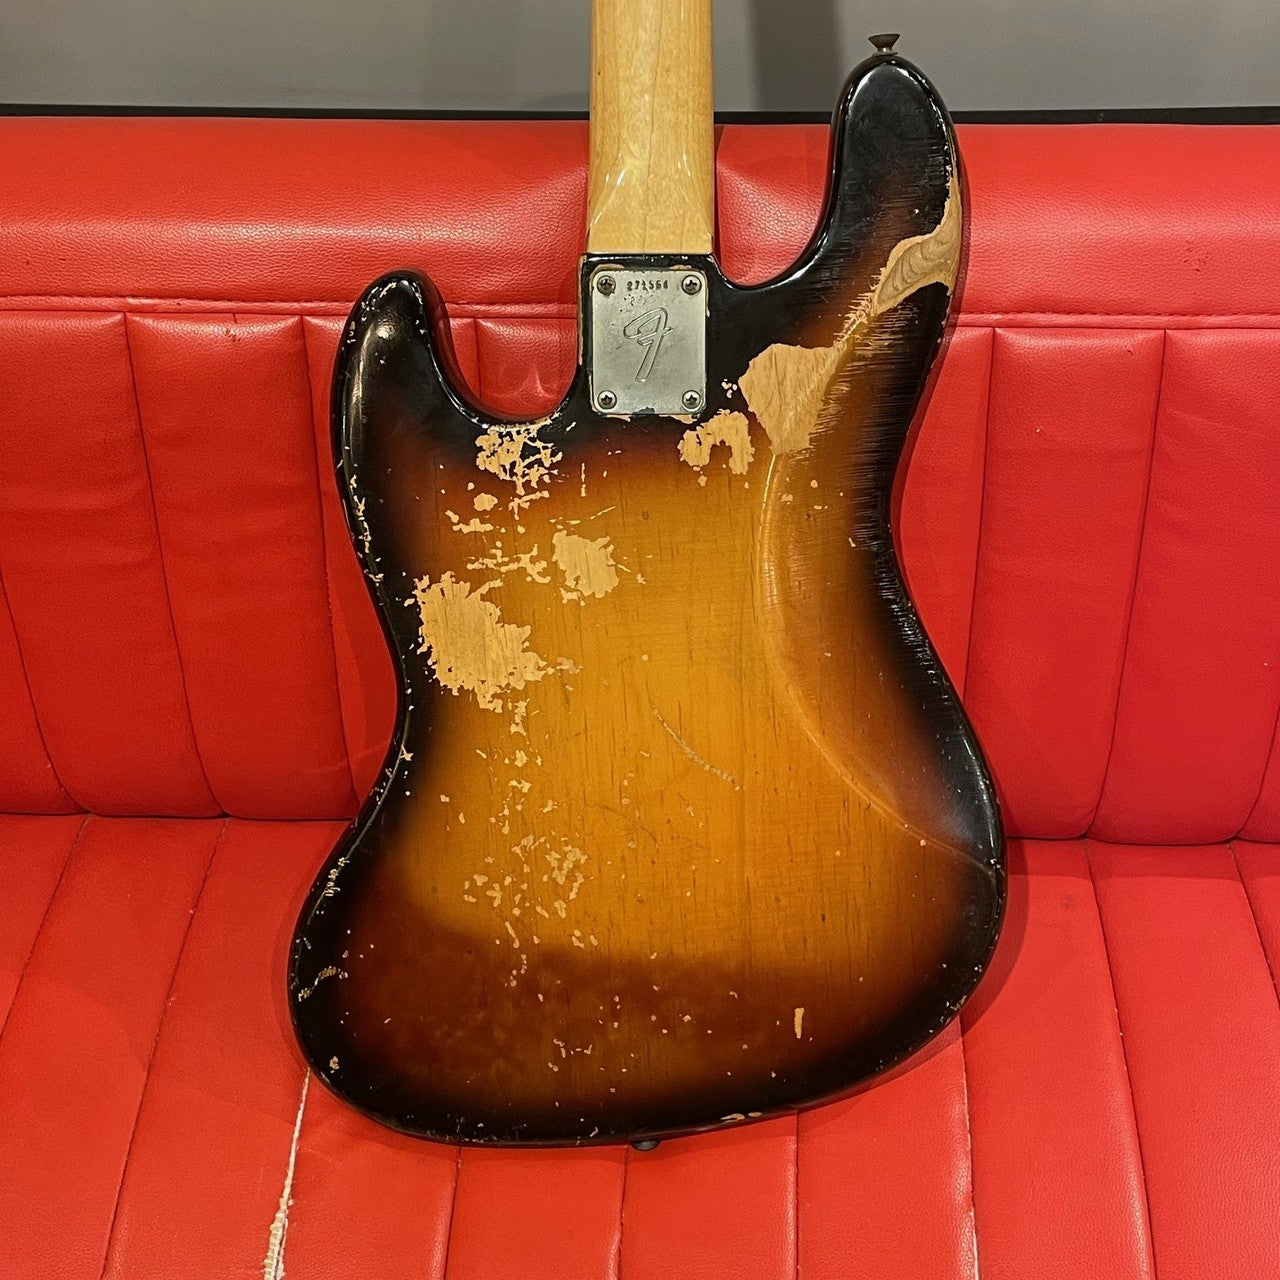 [SN 271554] USED Fender / 1969 Jazz Bass Sunburst [04]